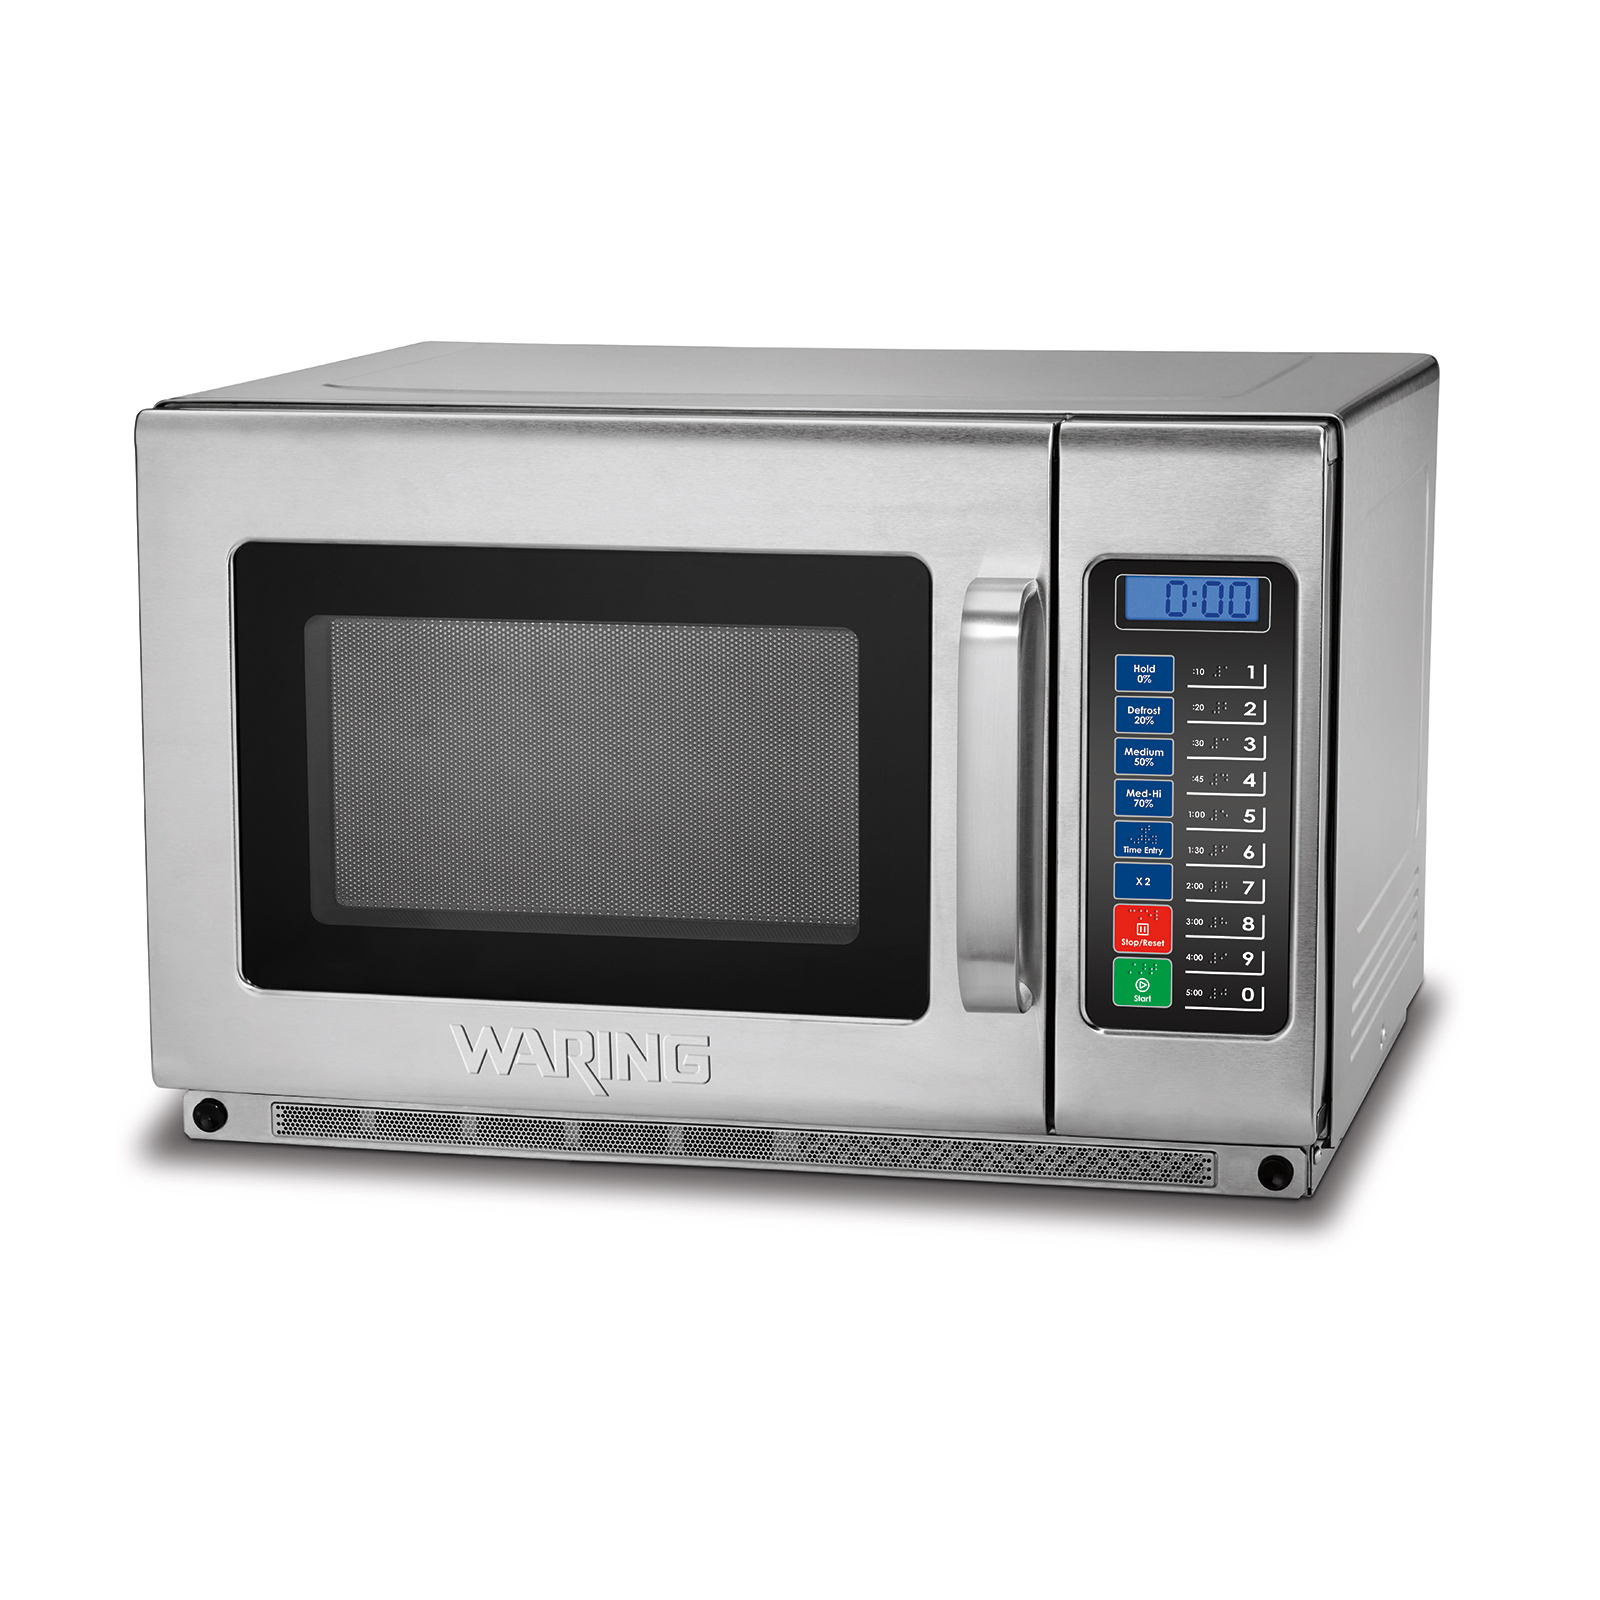 Waring WMO120 Microwave Oven